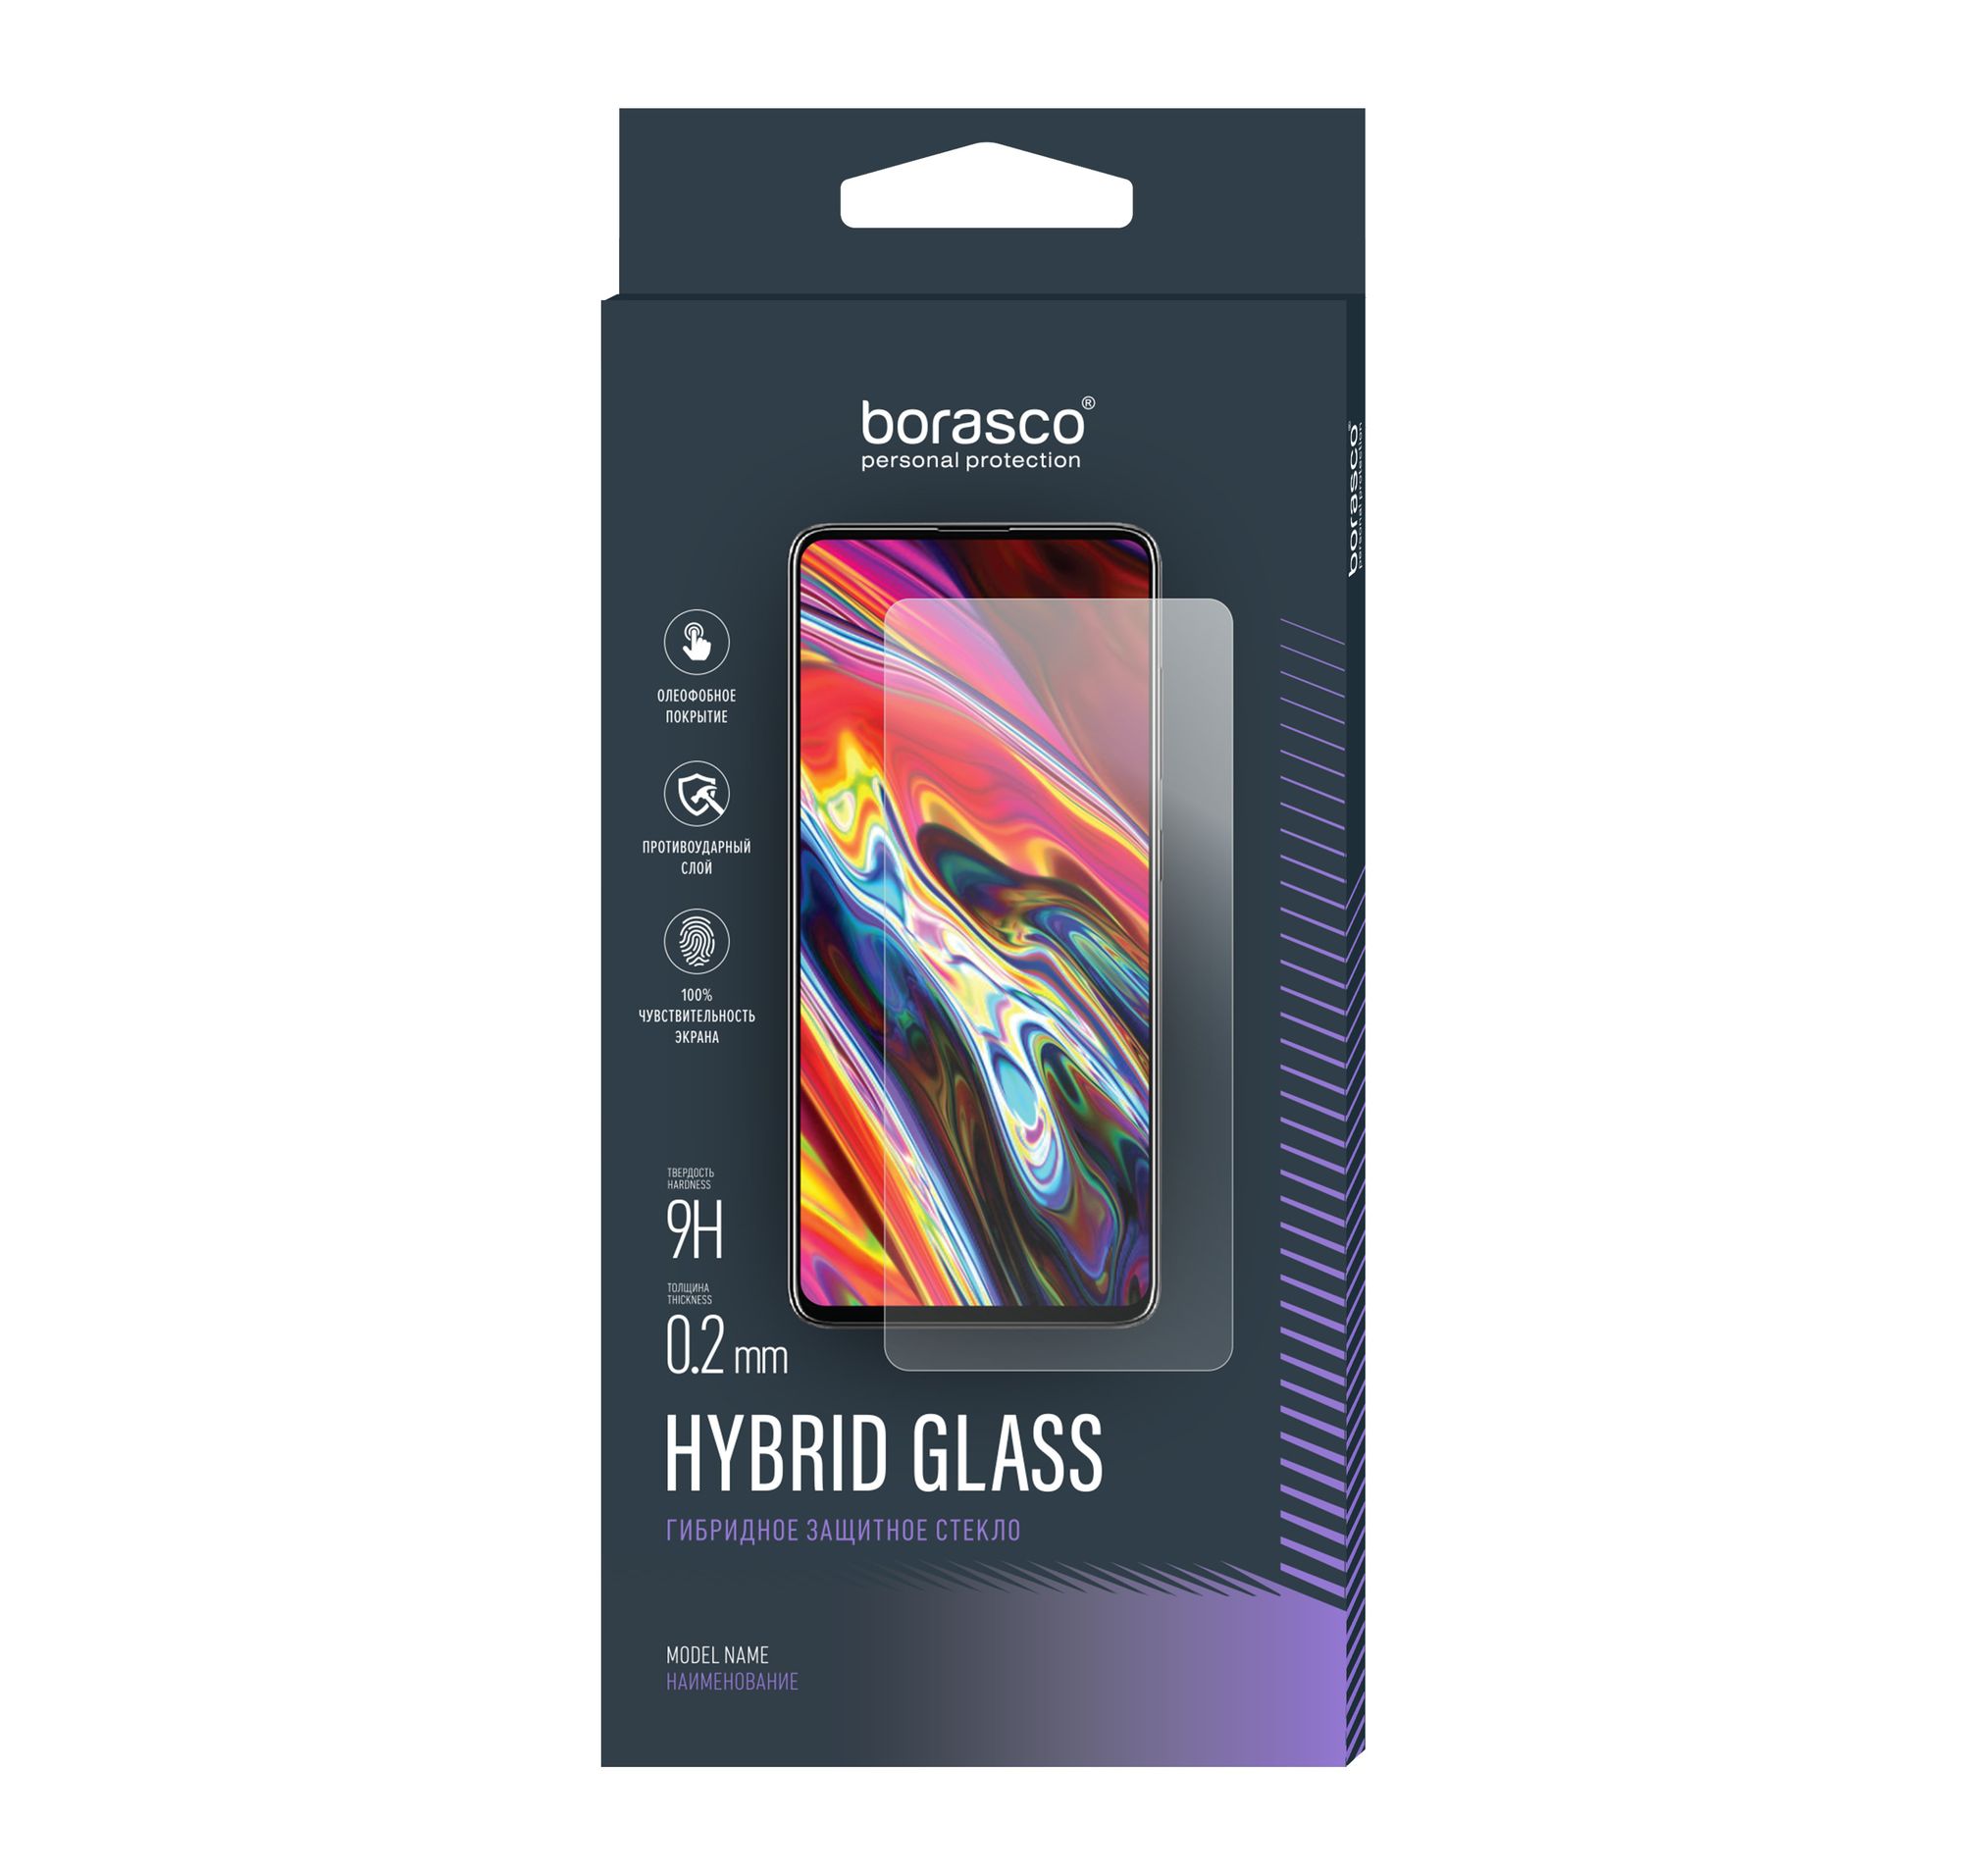 Стекло защитное Hybrid Glass VSP 0,26 мм для iPhone 6 Plus/6S Plus защитное стекло 5d для iphone 6 plus 6s plus черное black